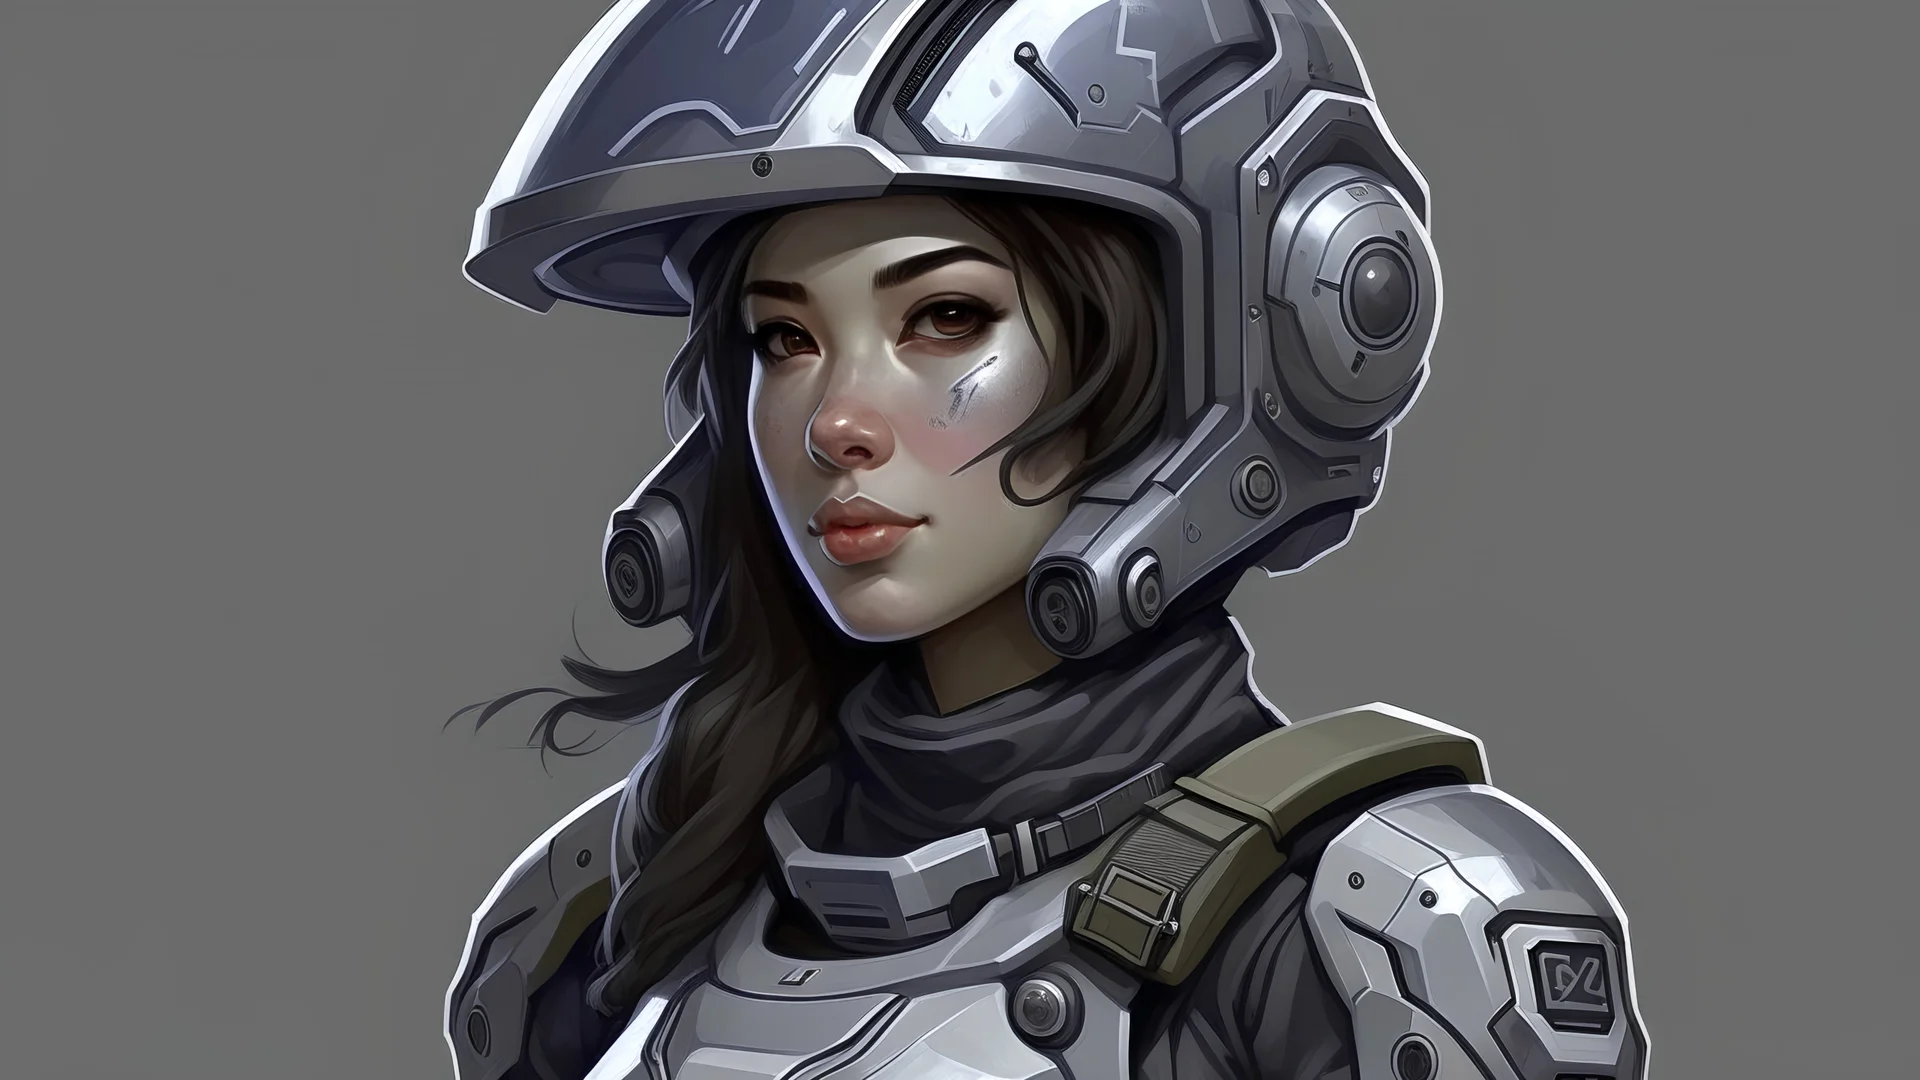 Illustration, girl in warfare realistic armor,helmet, modern style,grey background,full face